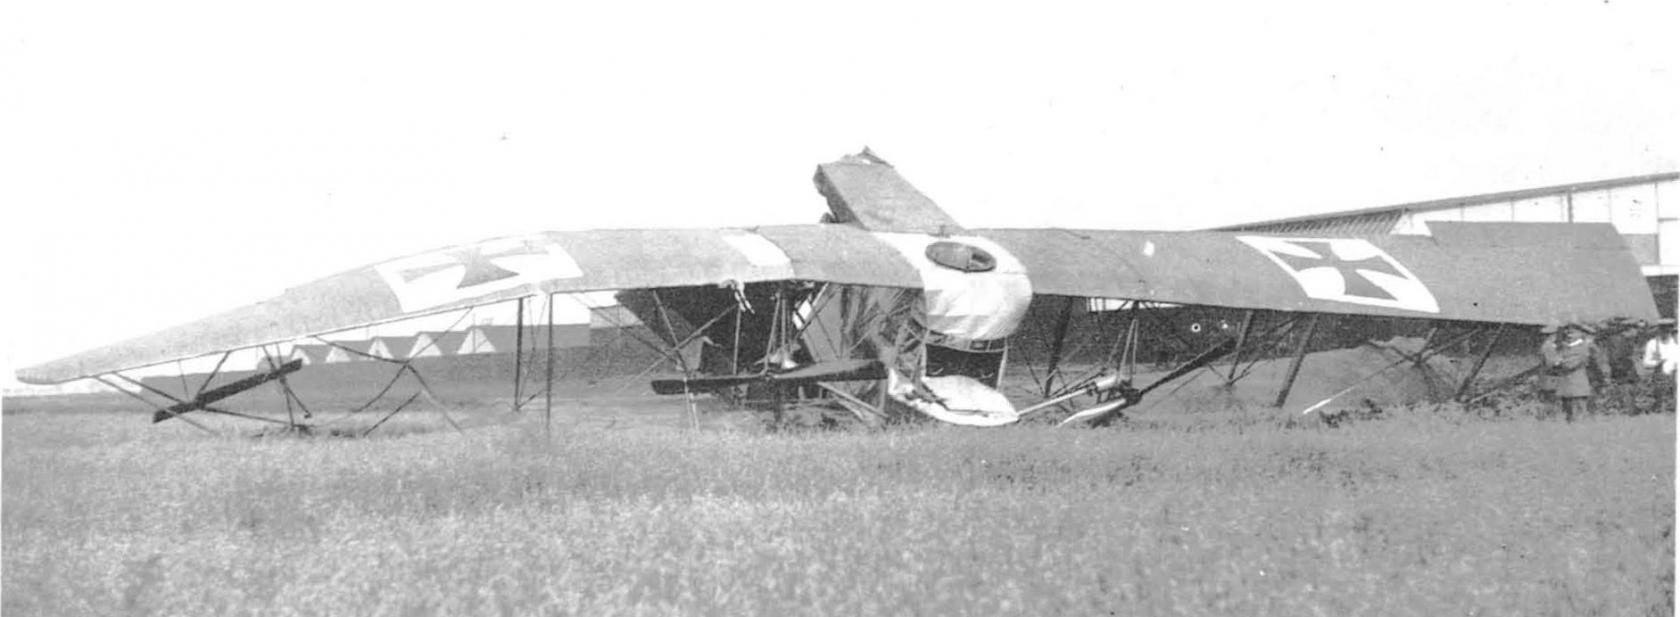 Катастрофа SSW R.I 1/15 после отказа двигателя на высоте 8 м, август 1915 года